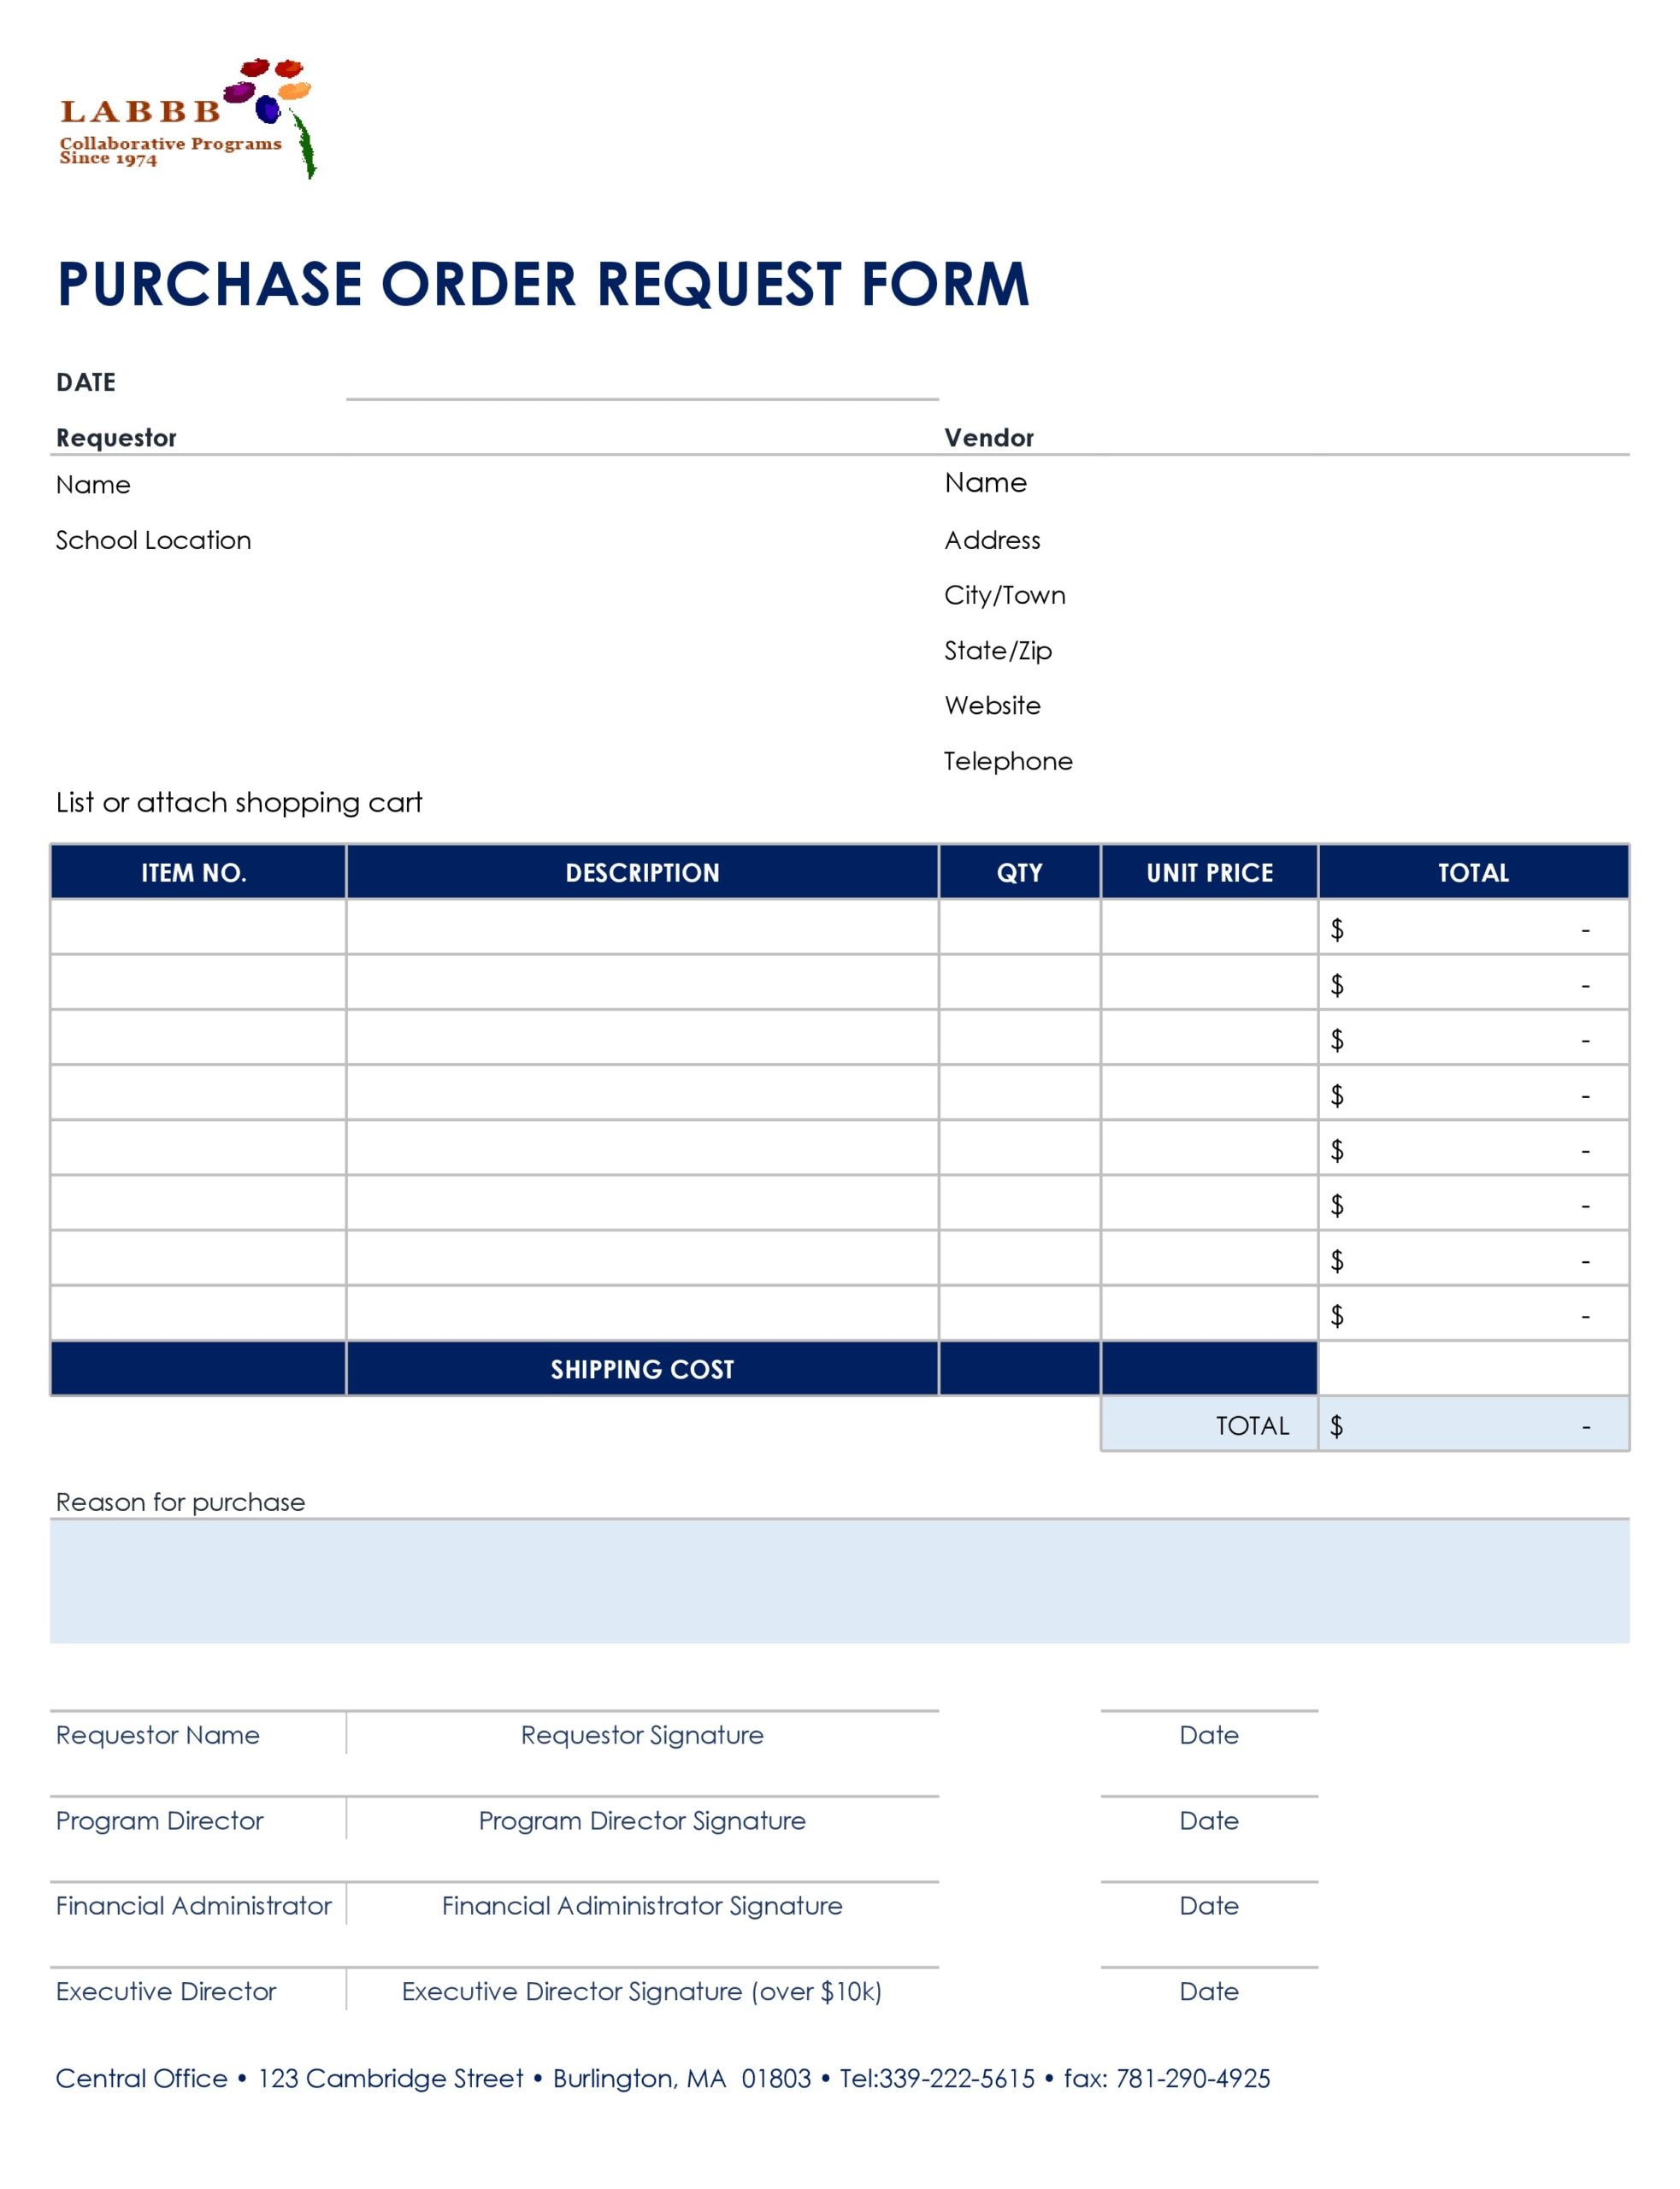 job order form template excel